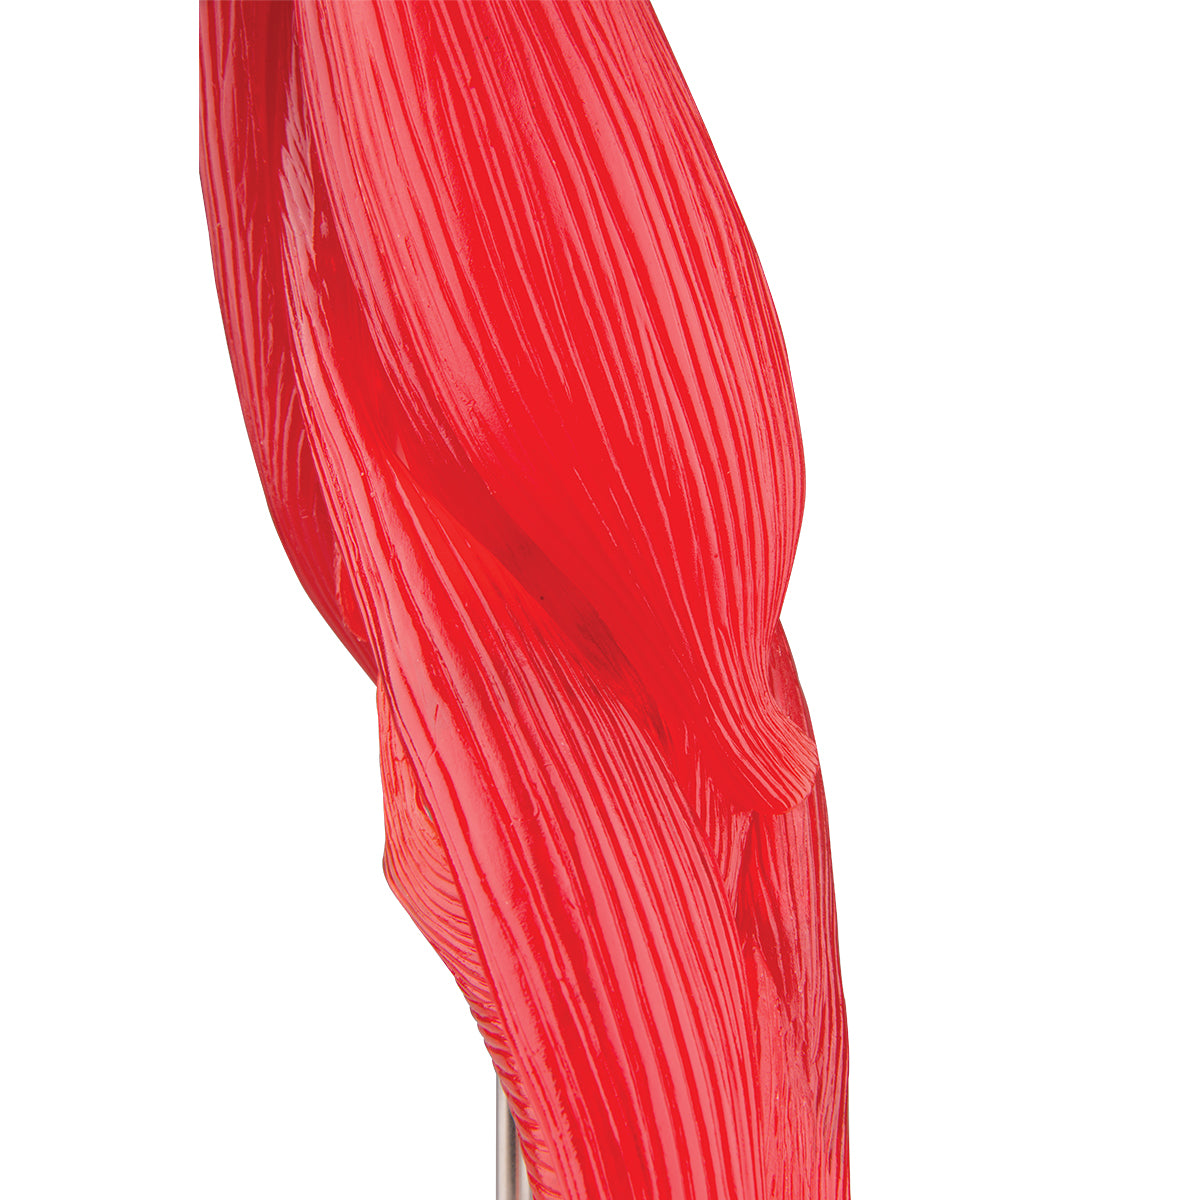 Fleksibel albuemodel med mange muskler, som kan afmonteres